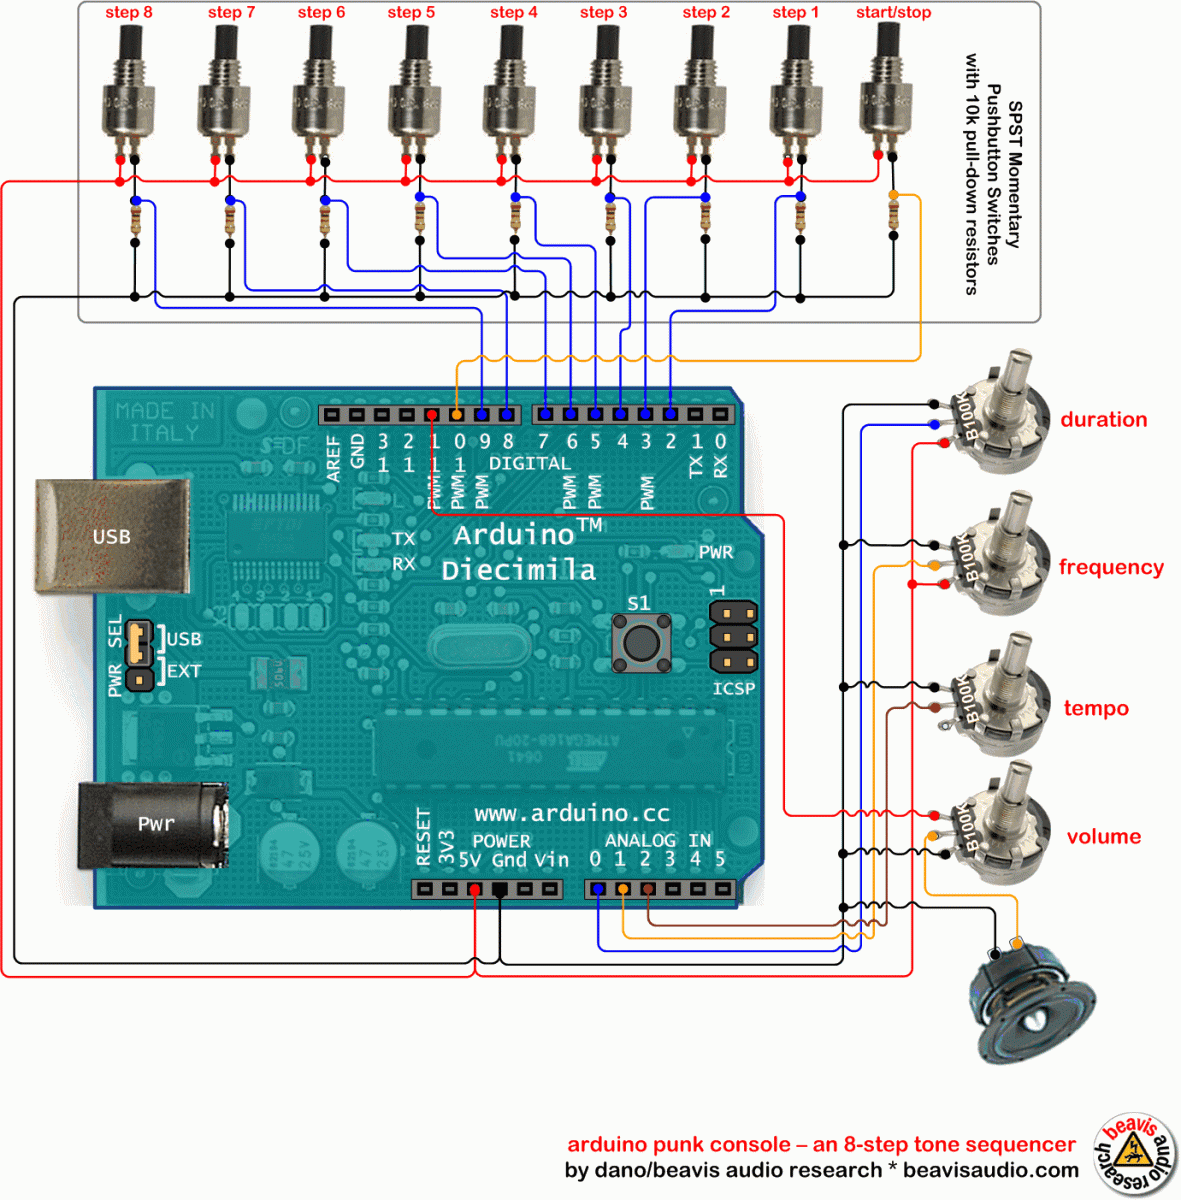 Arduino punk console Circuit